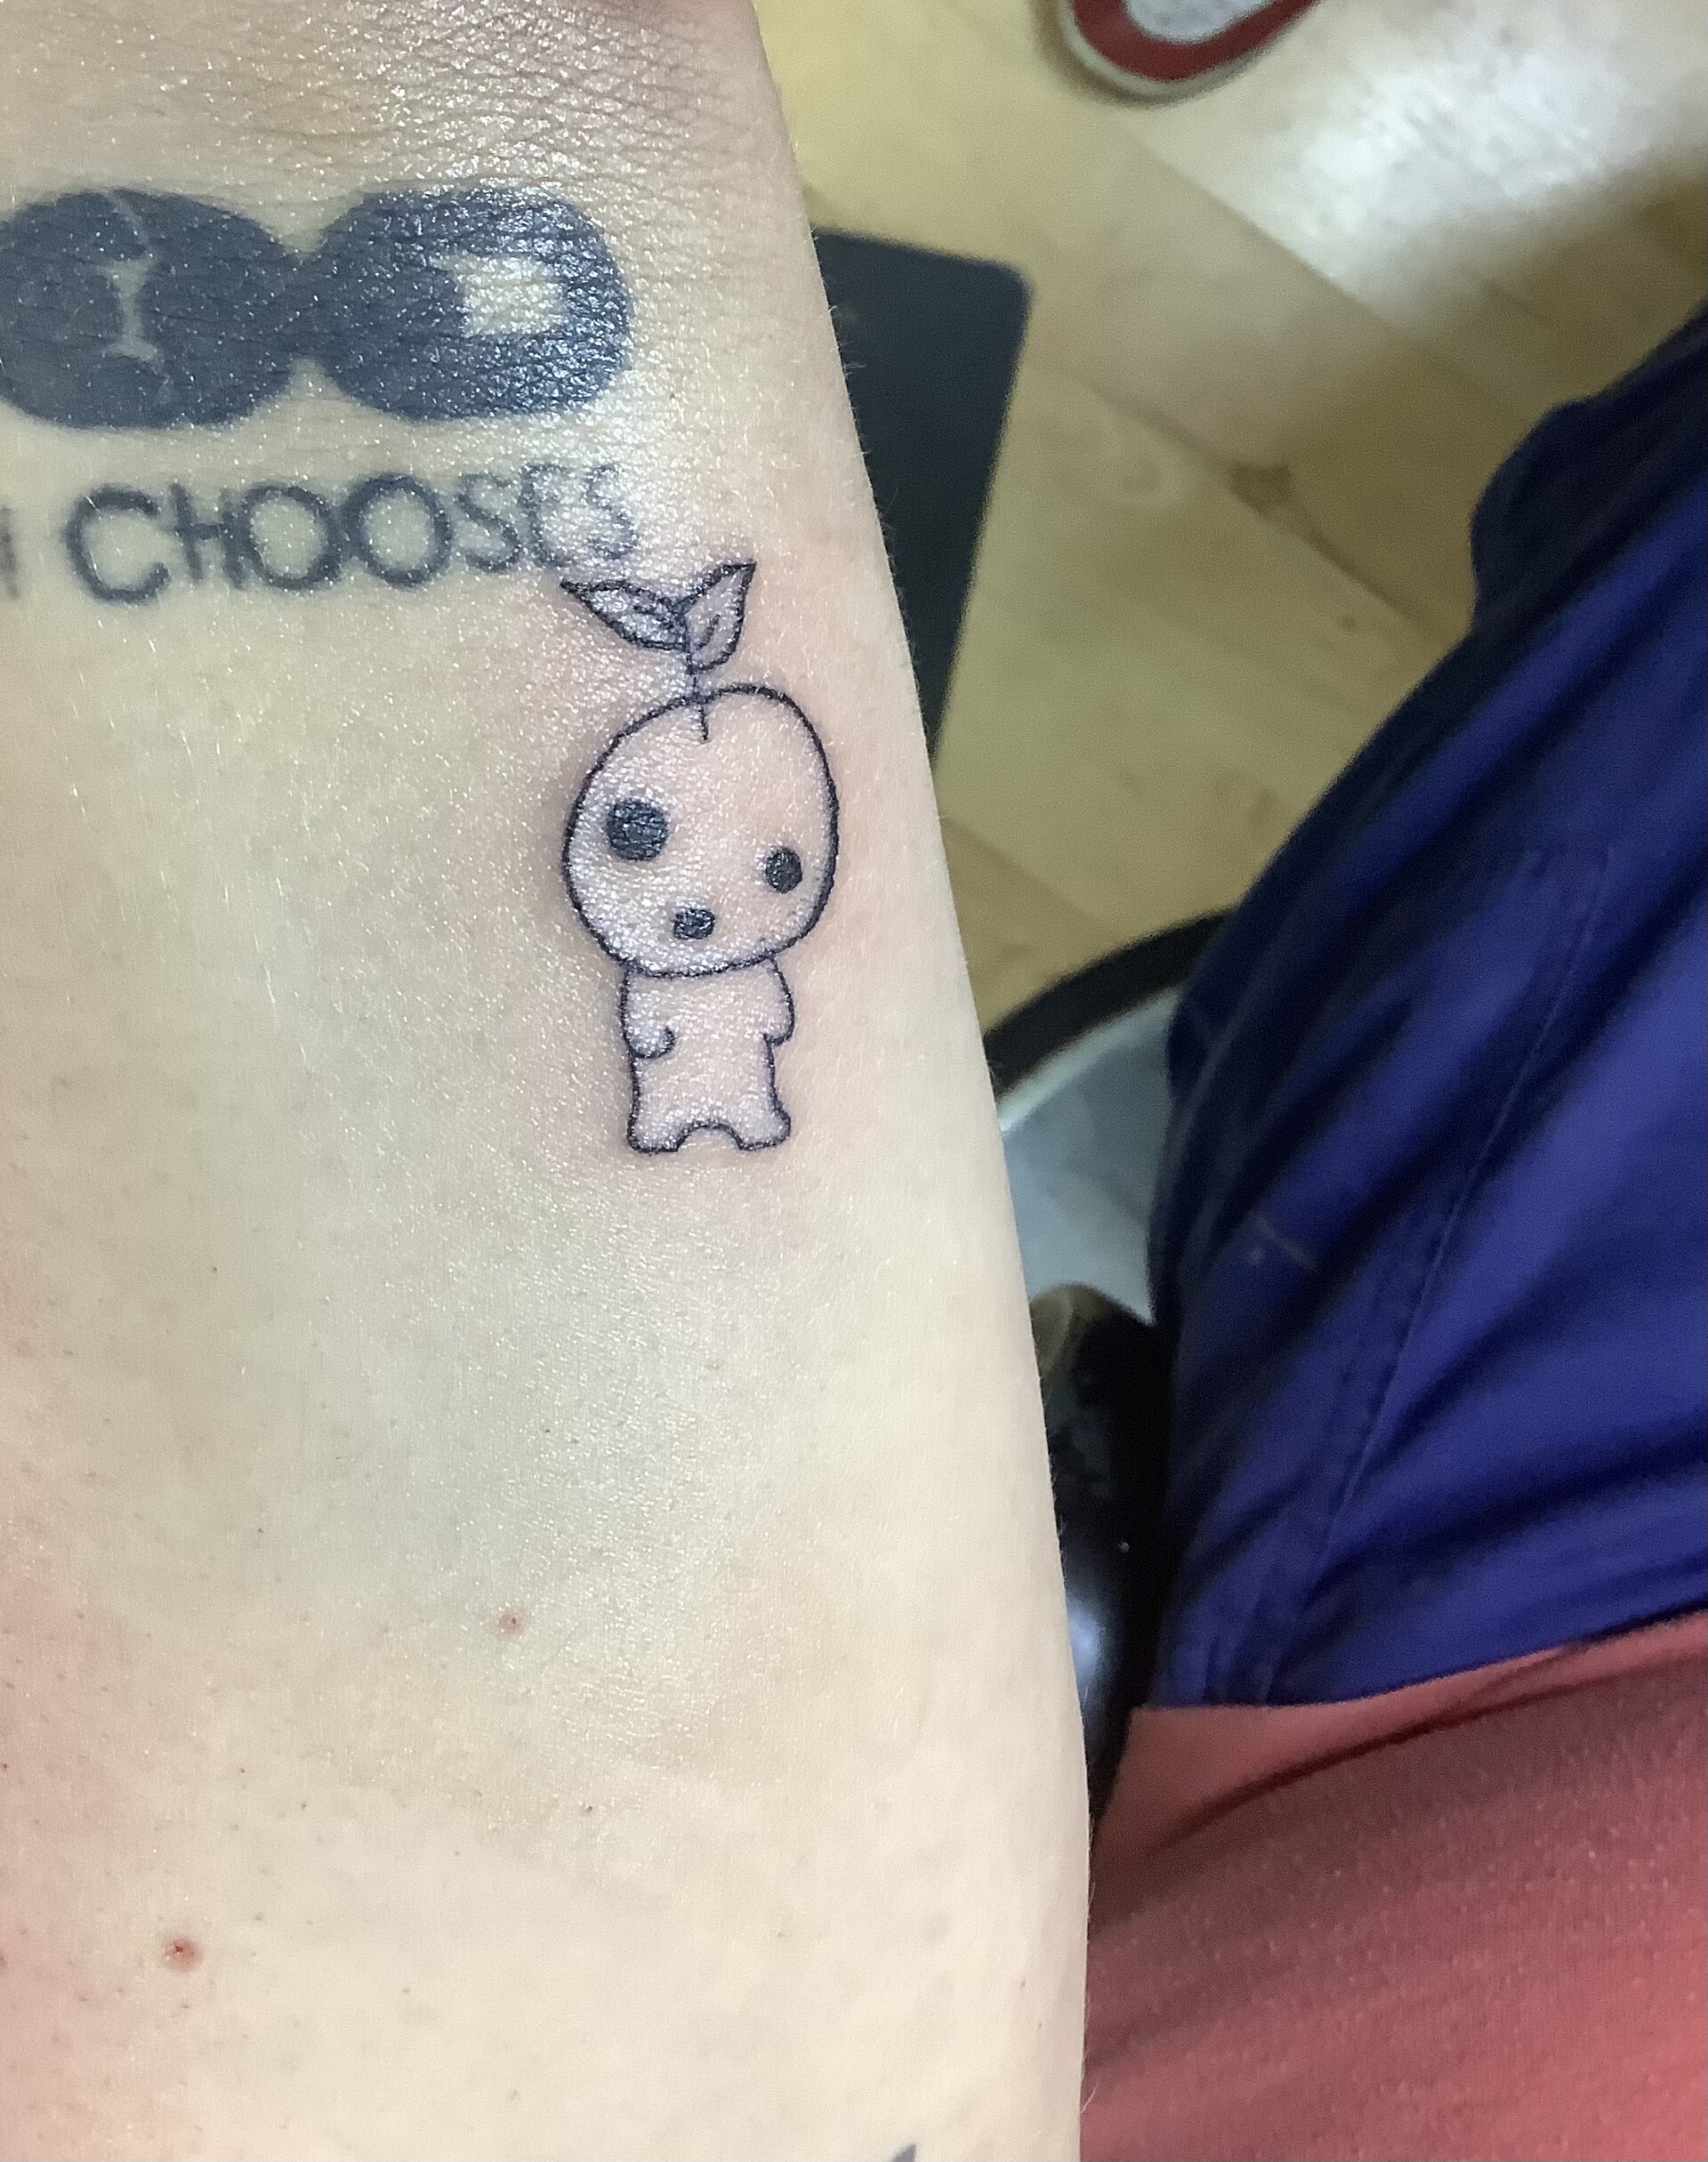 Anime Tattoo Artists at Rad Ink